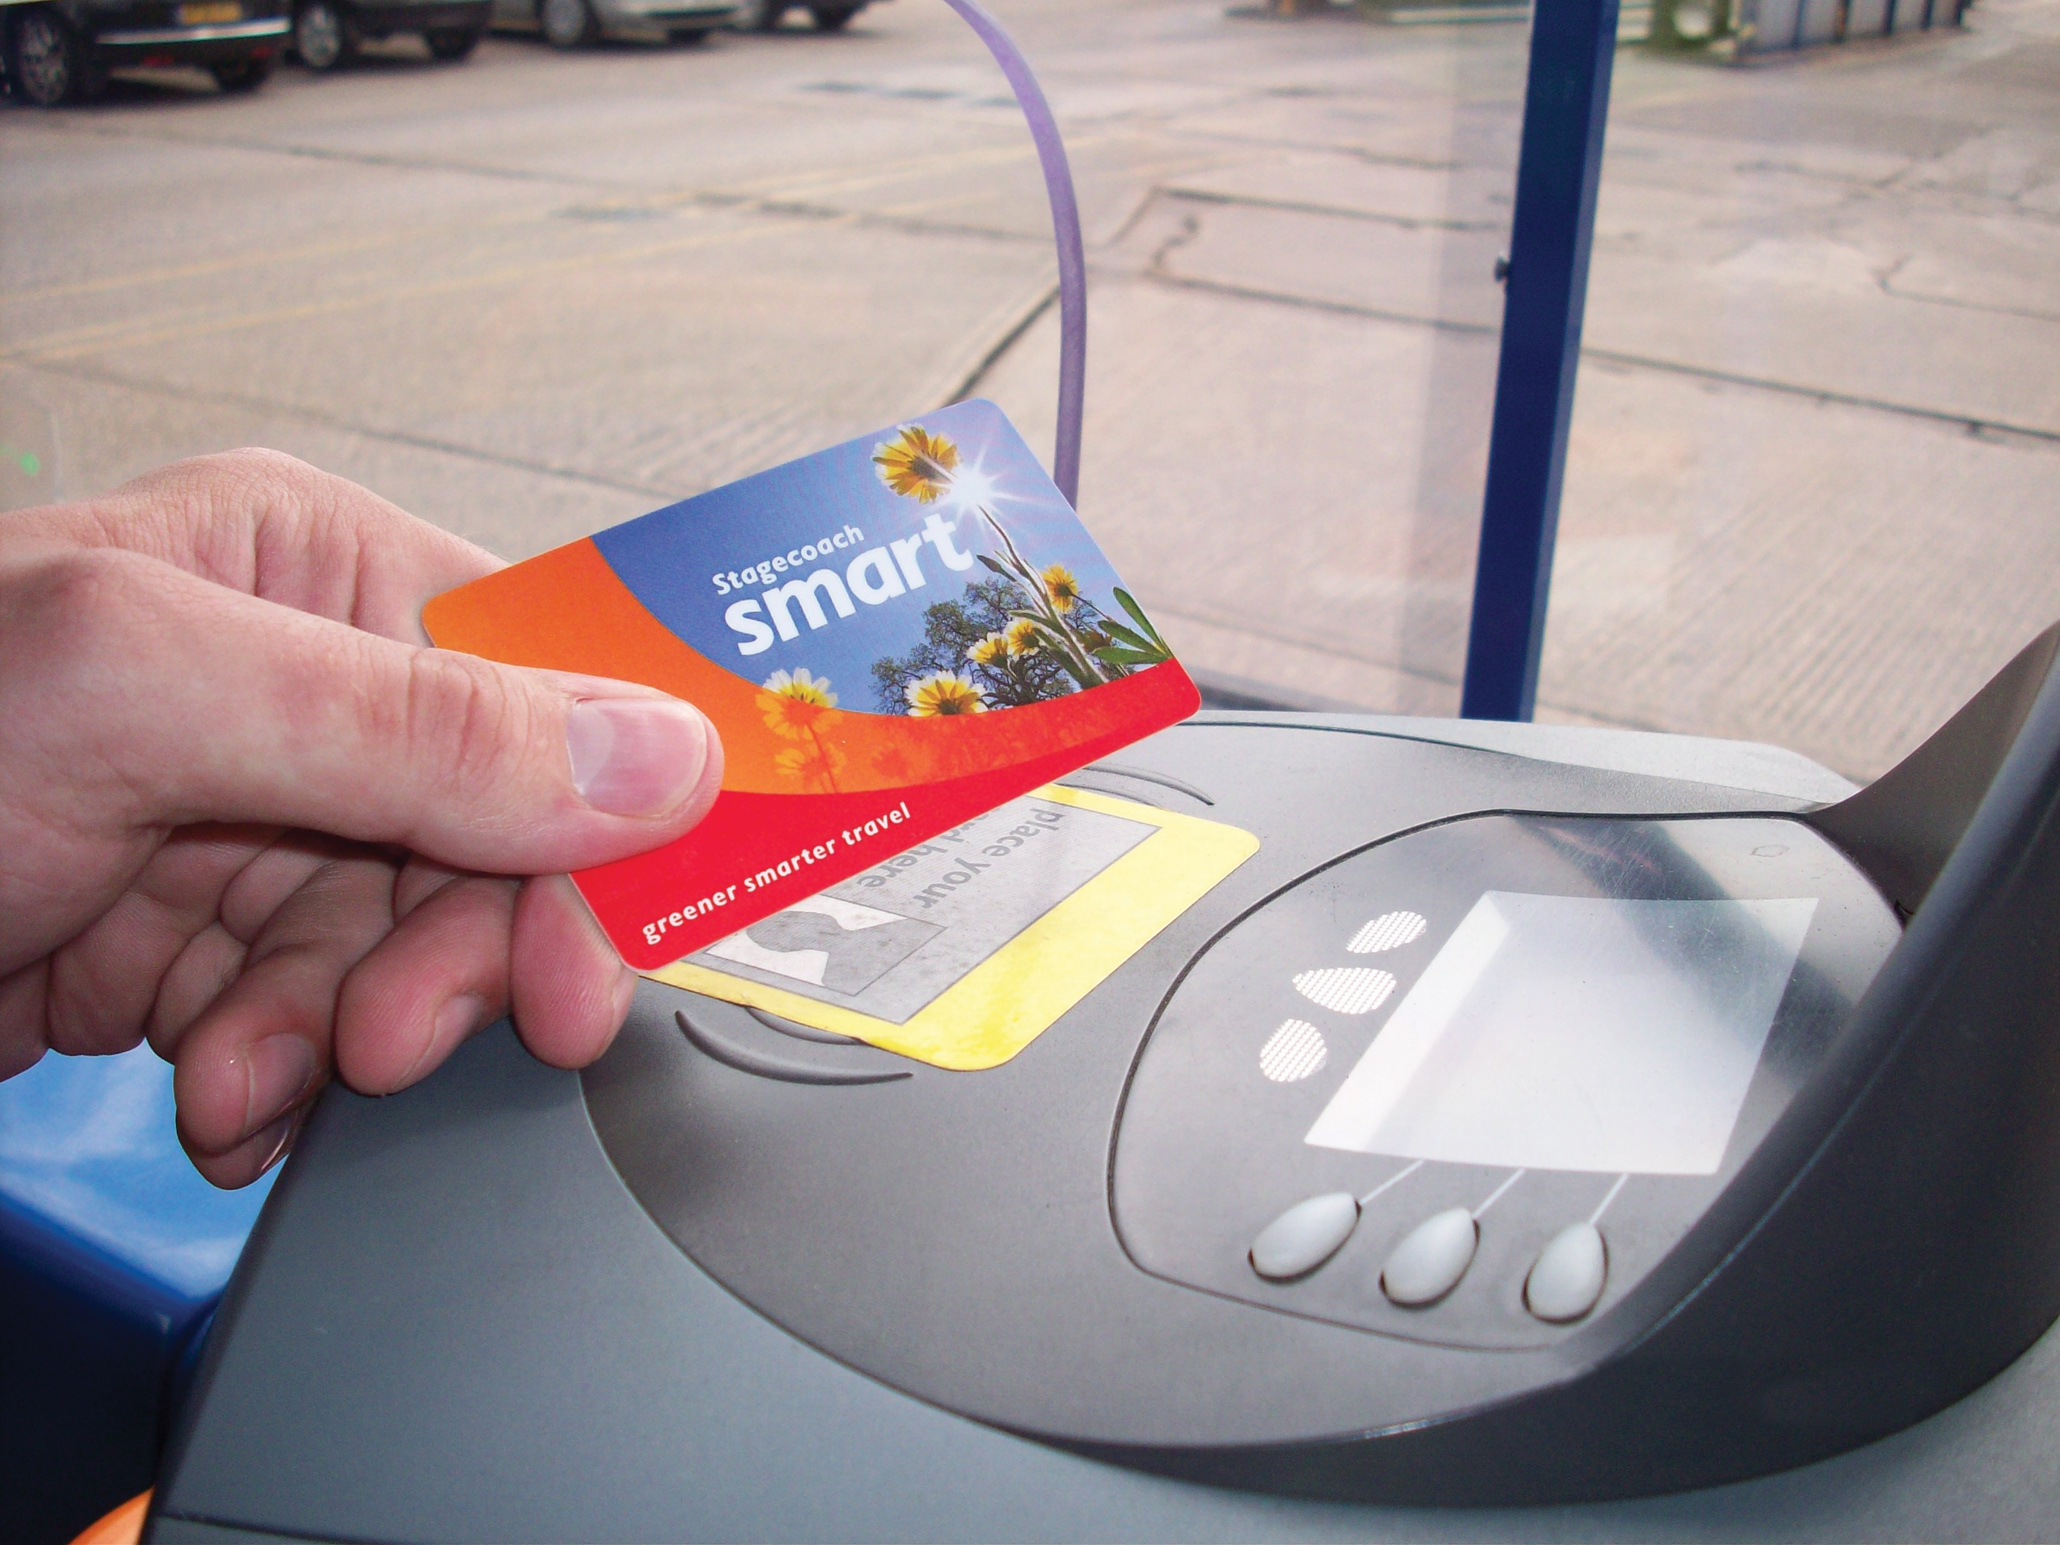 Major smartcard scheme launched on Manchester buses | Greener Journeys